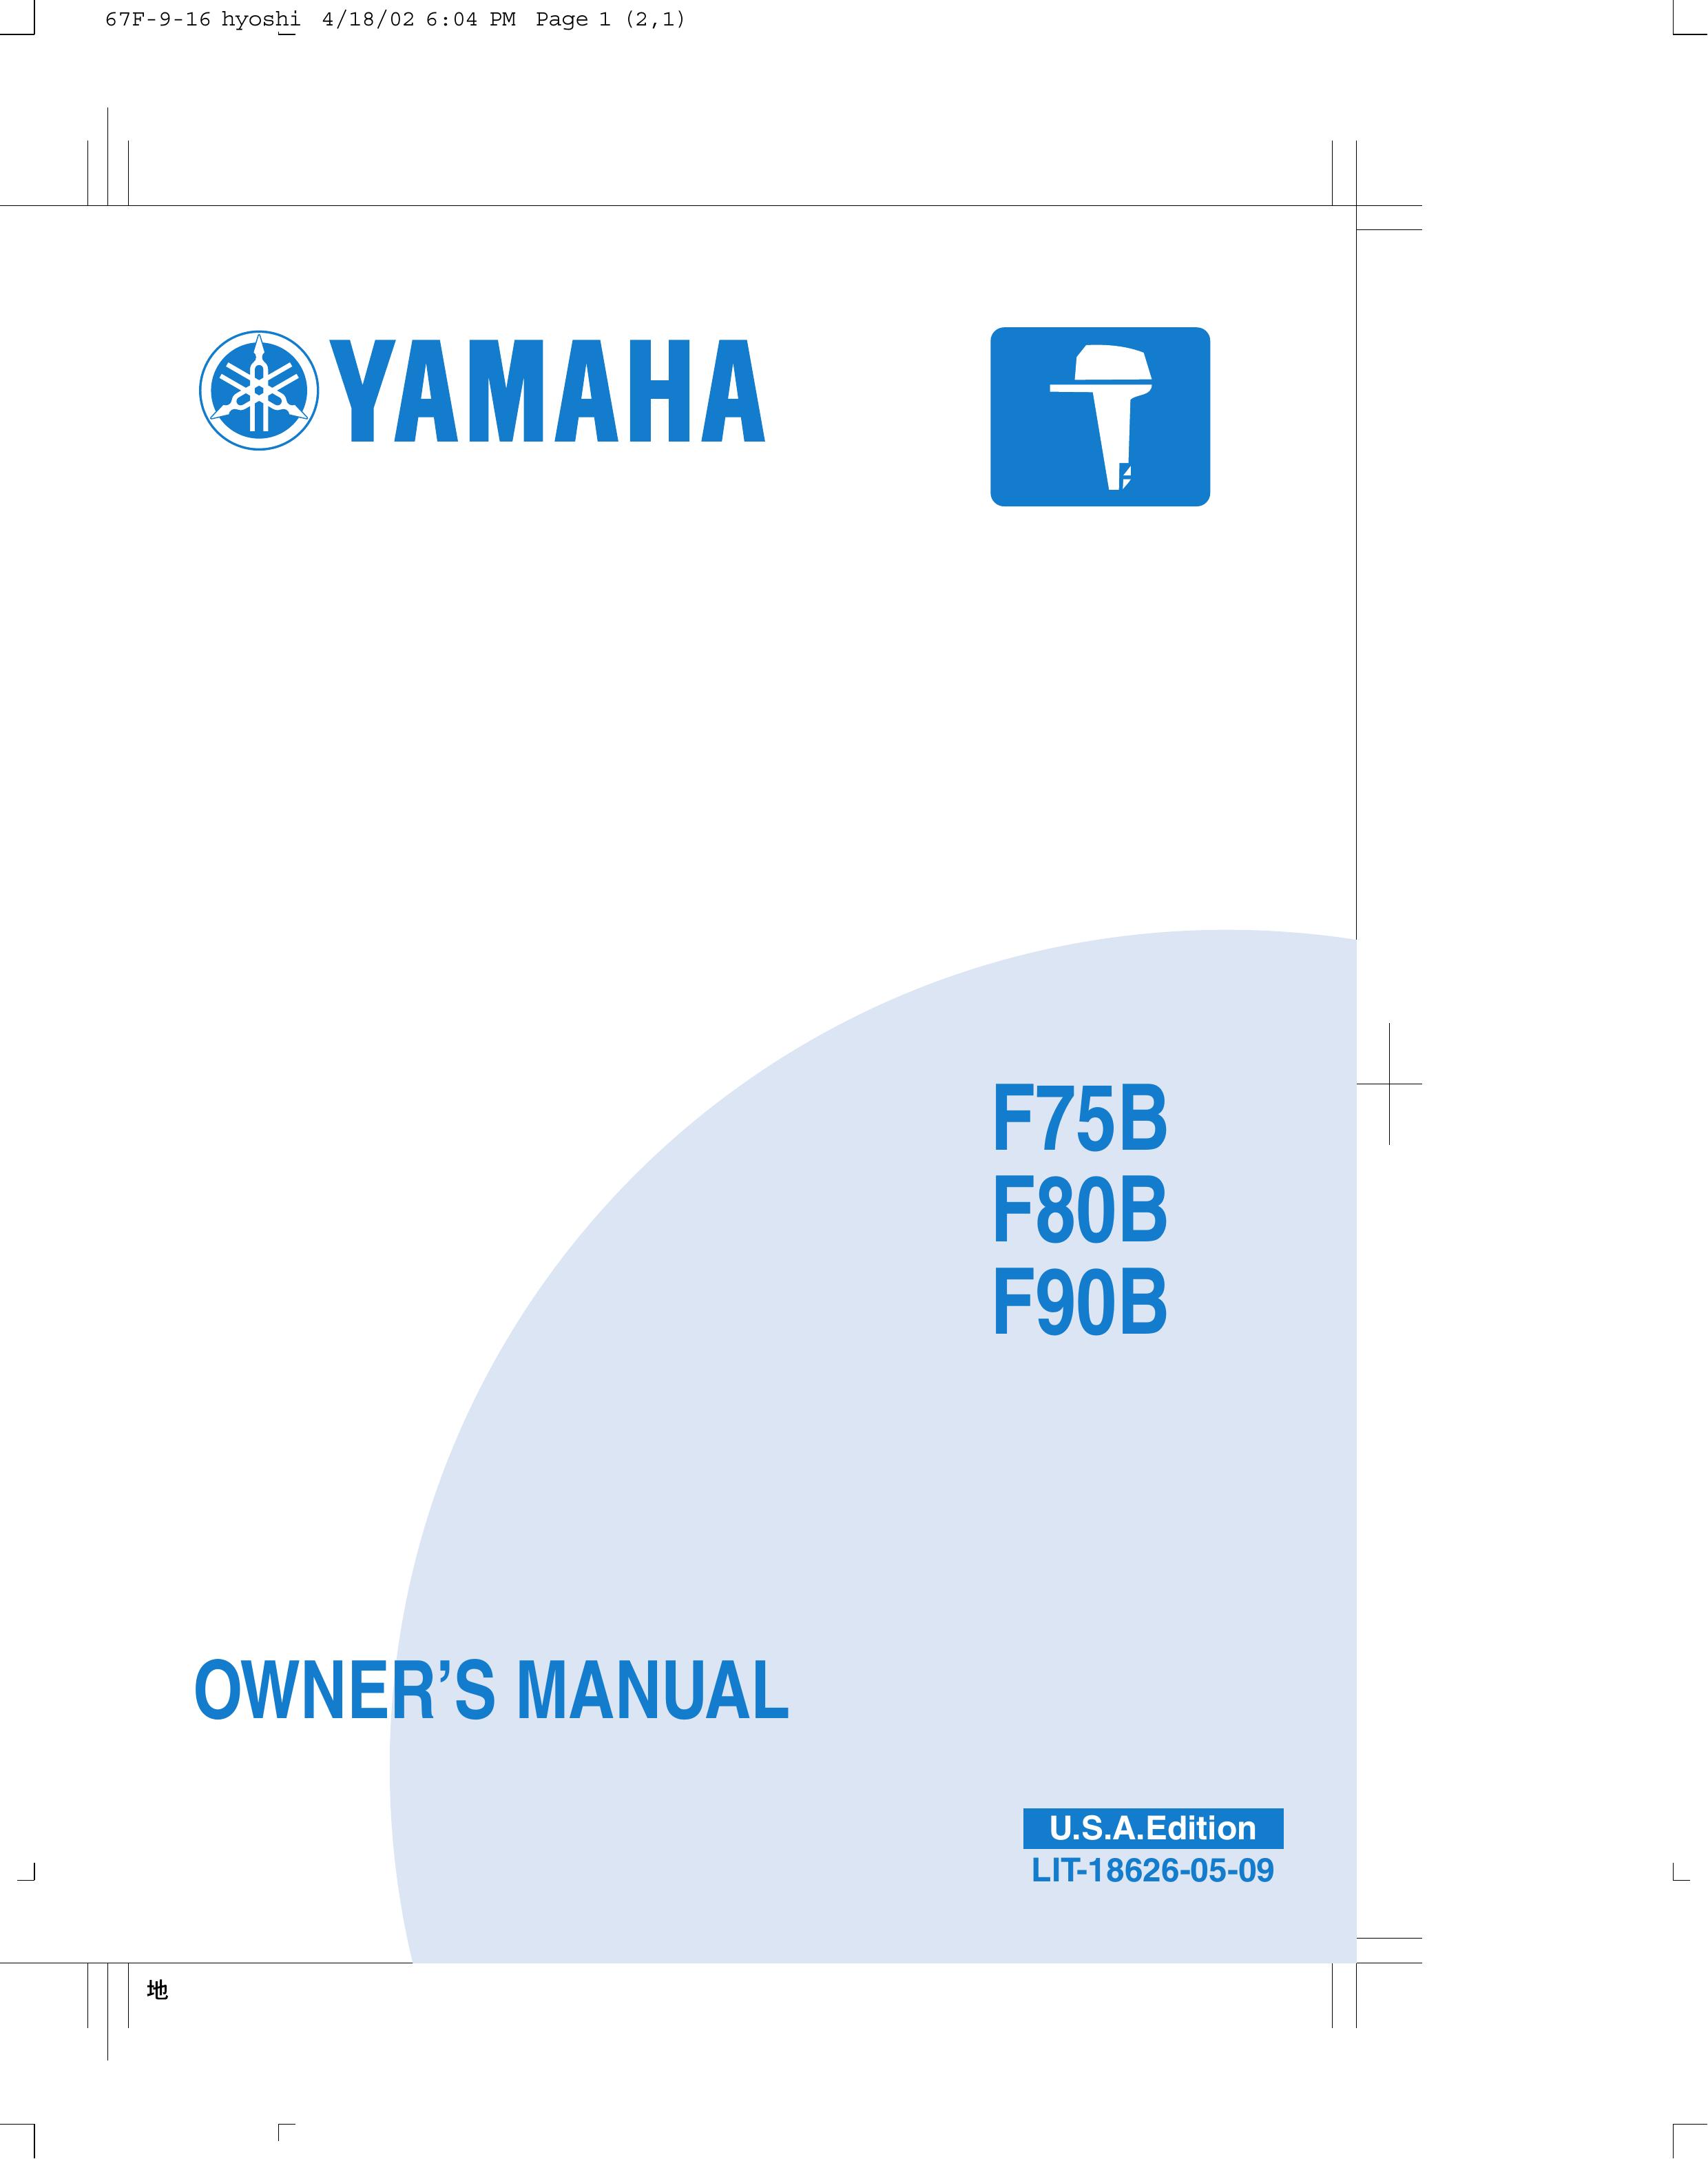 Yamaha F90B Outboard Motor User Manual